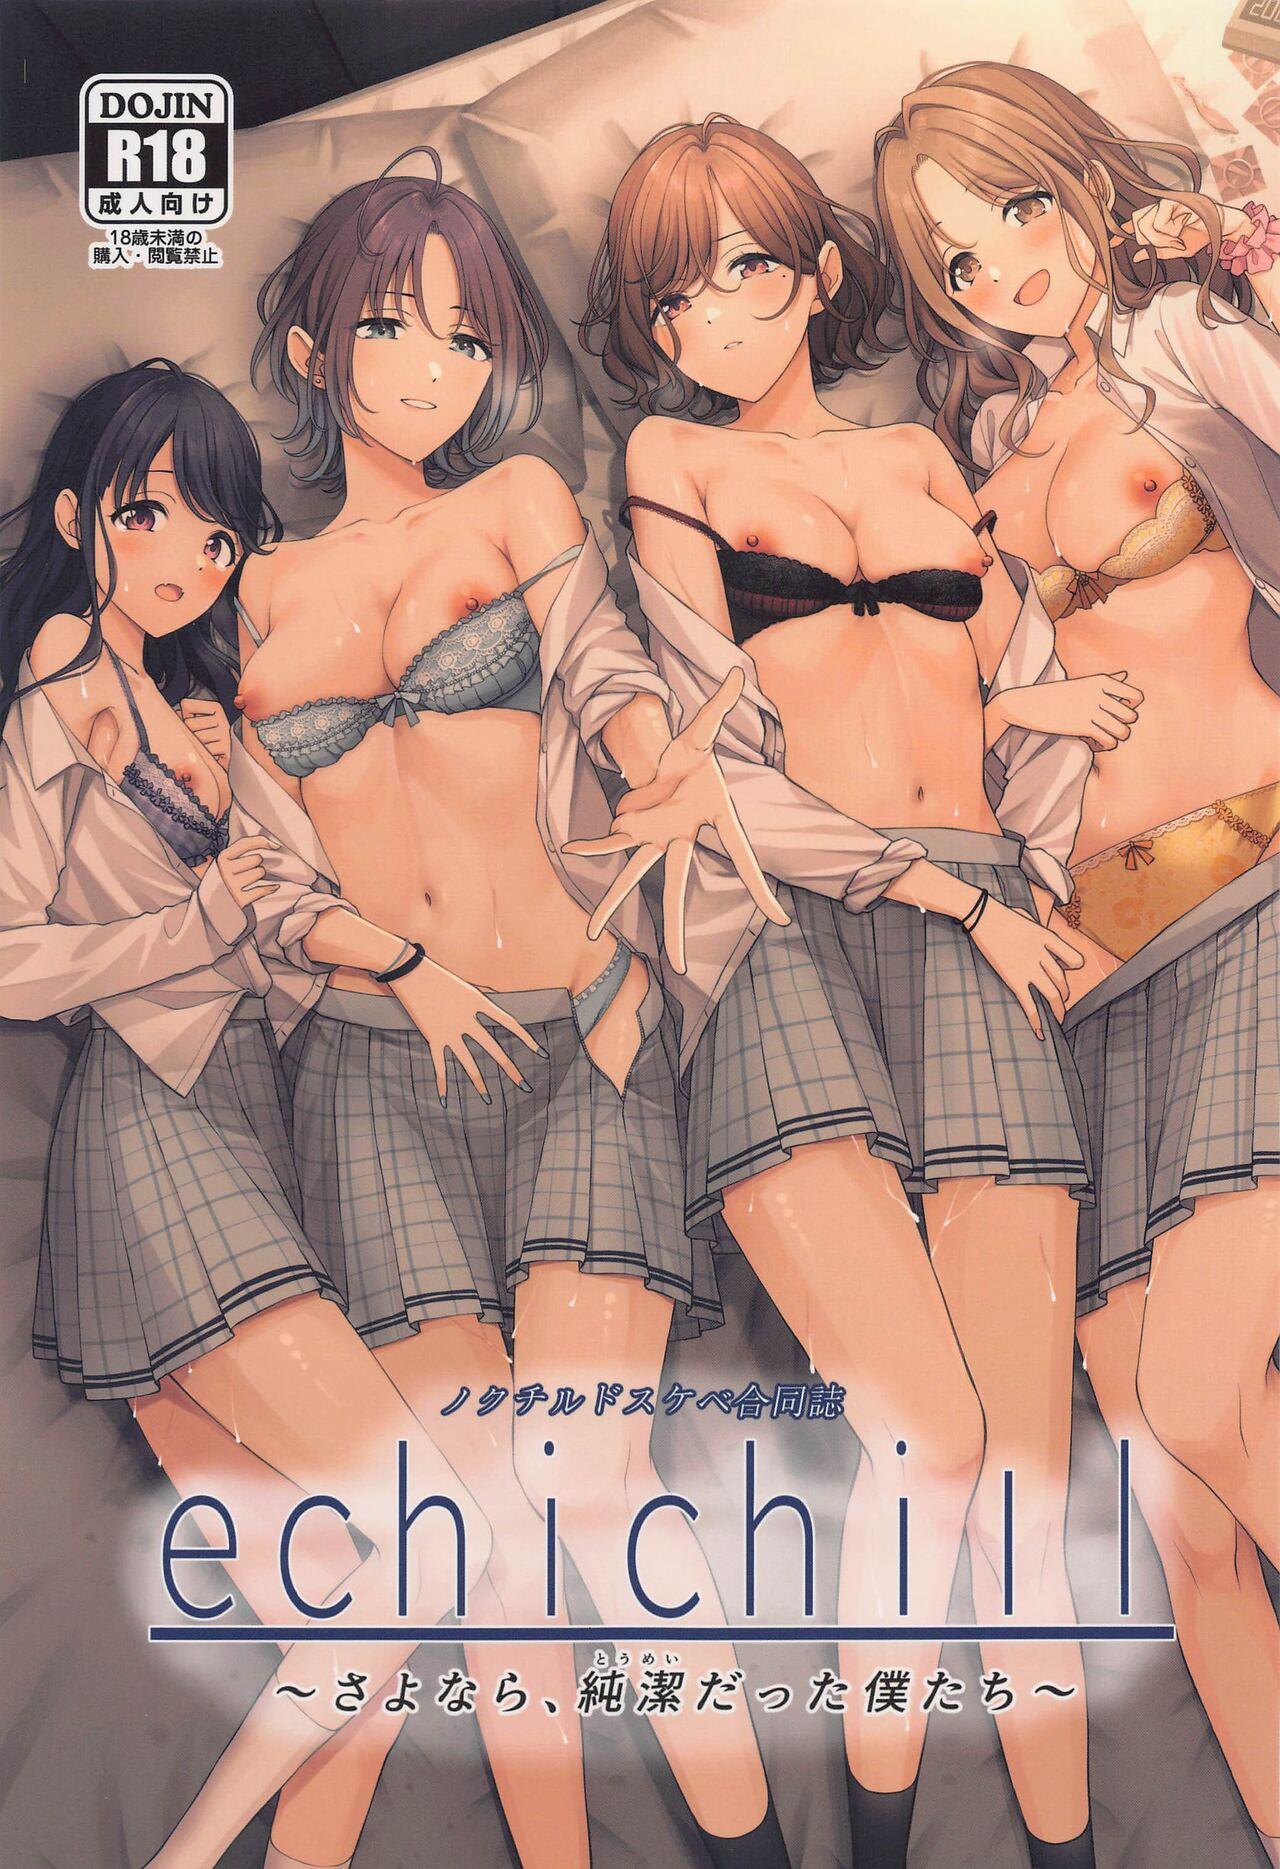 3some noctchill Dosukebe Goudoushi echichill - The idolmaster Safado - Picture 1